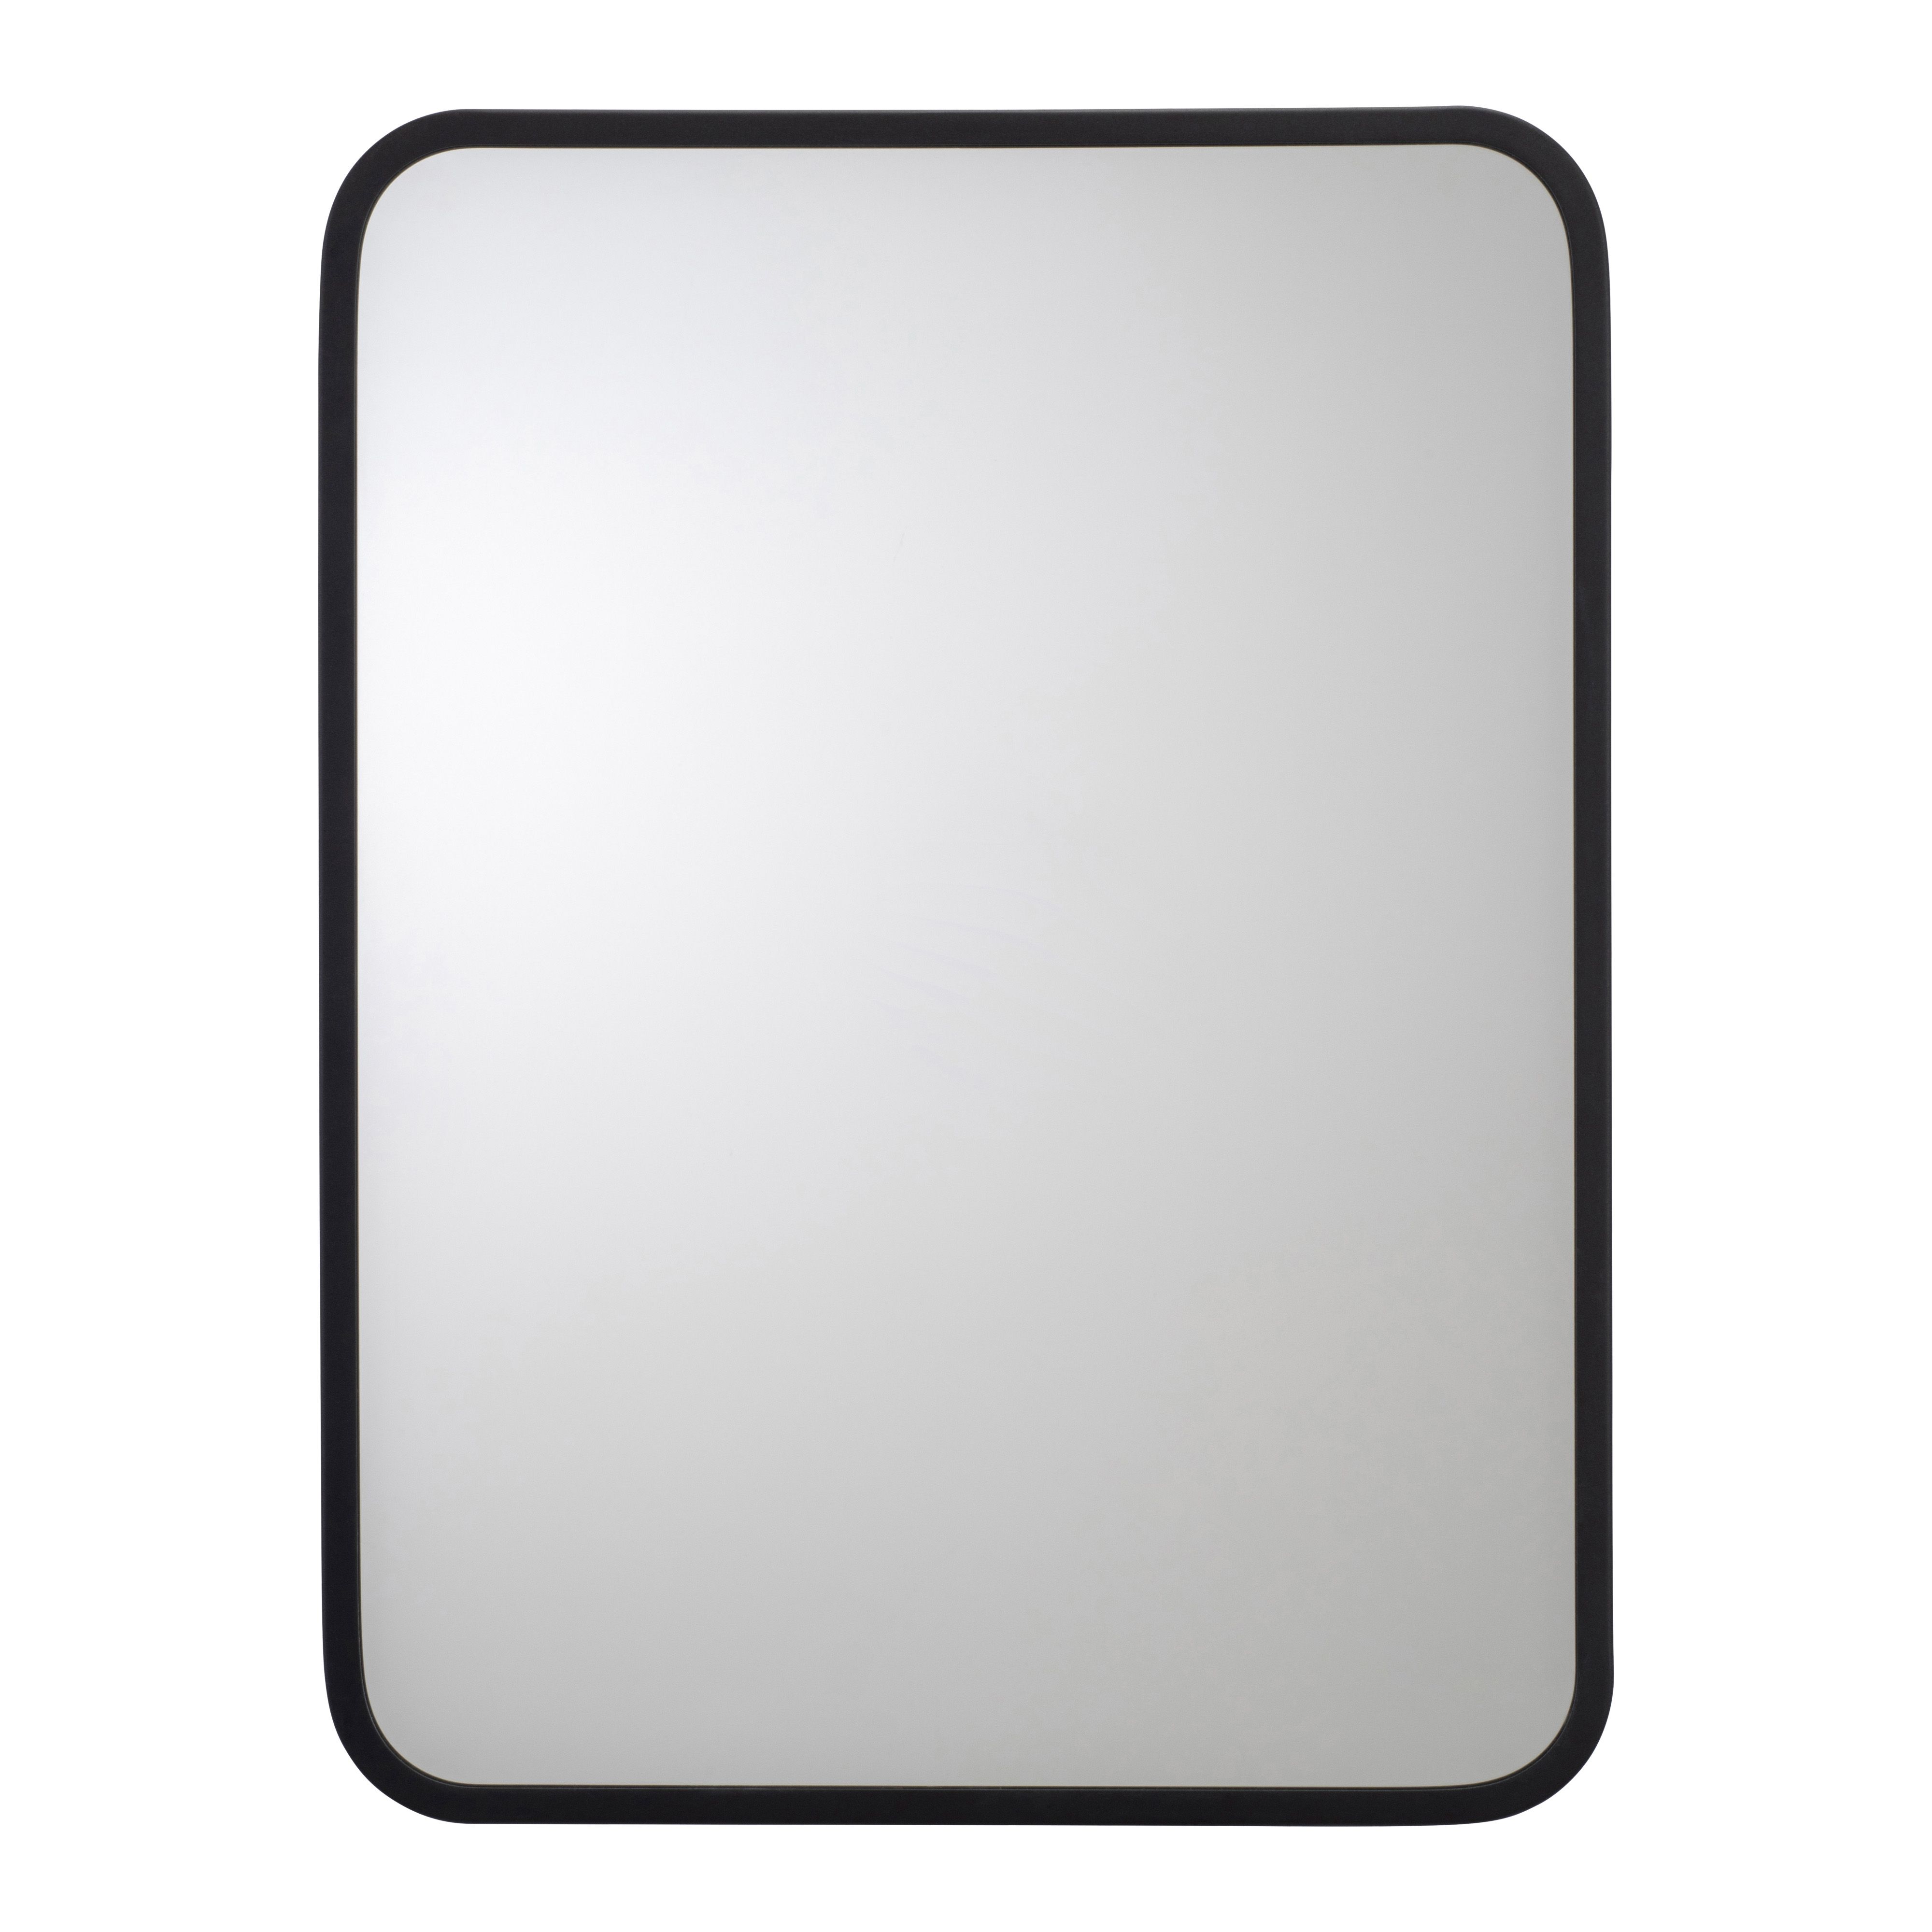 Croydex Black Single Bathroom Wall cabinet With Mirrored door (H)603mm (W)453mm